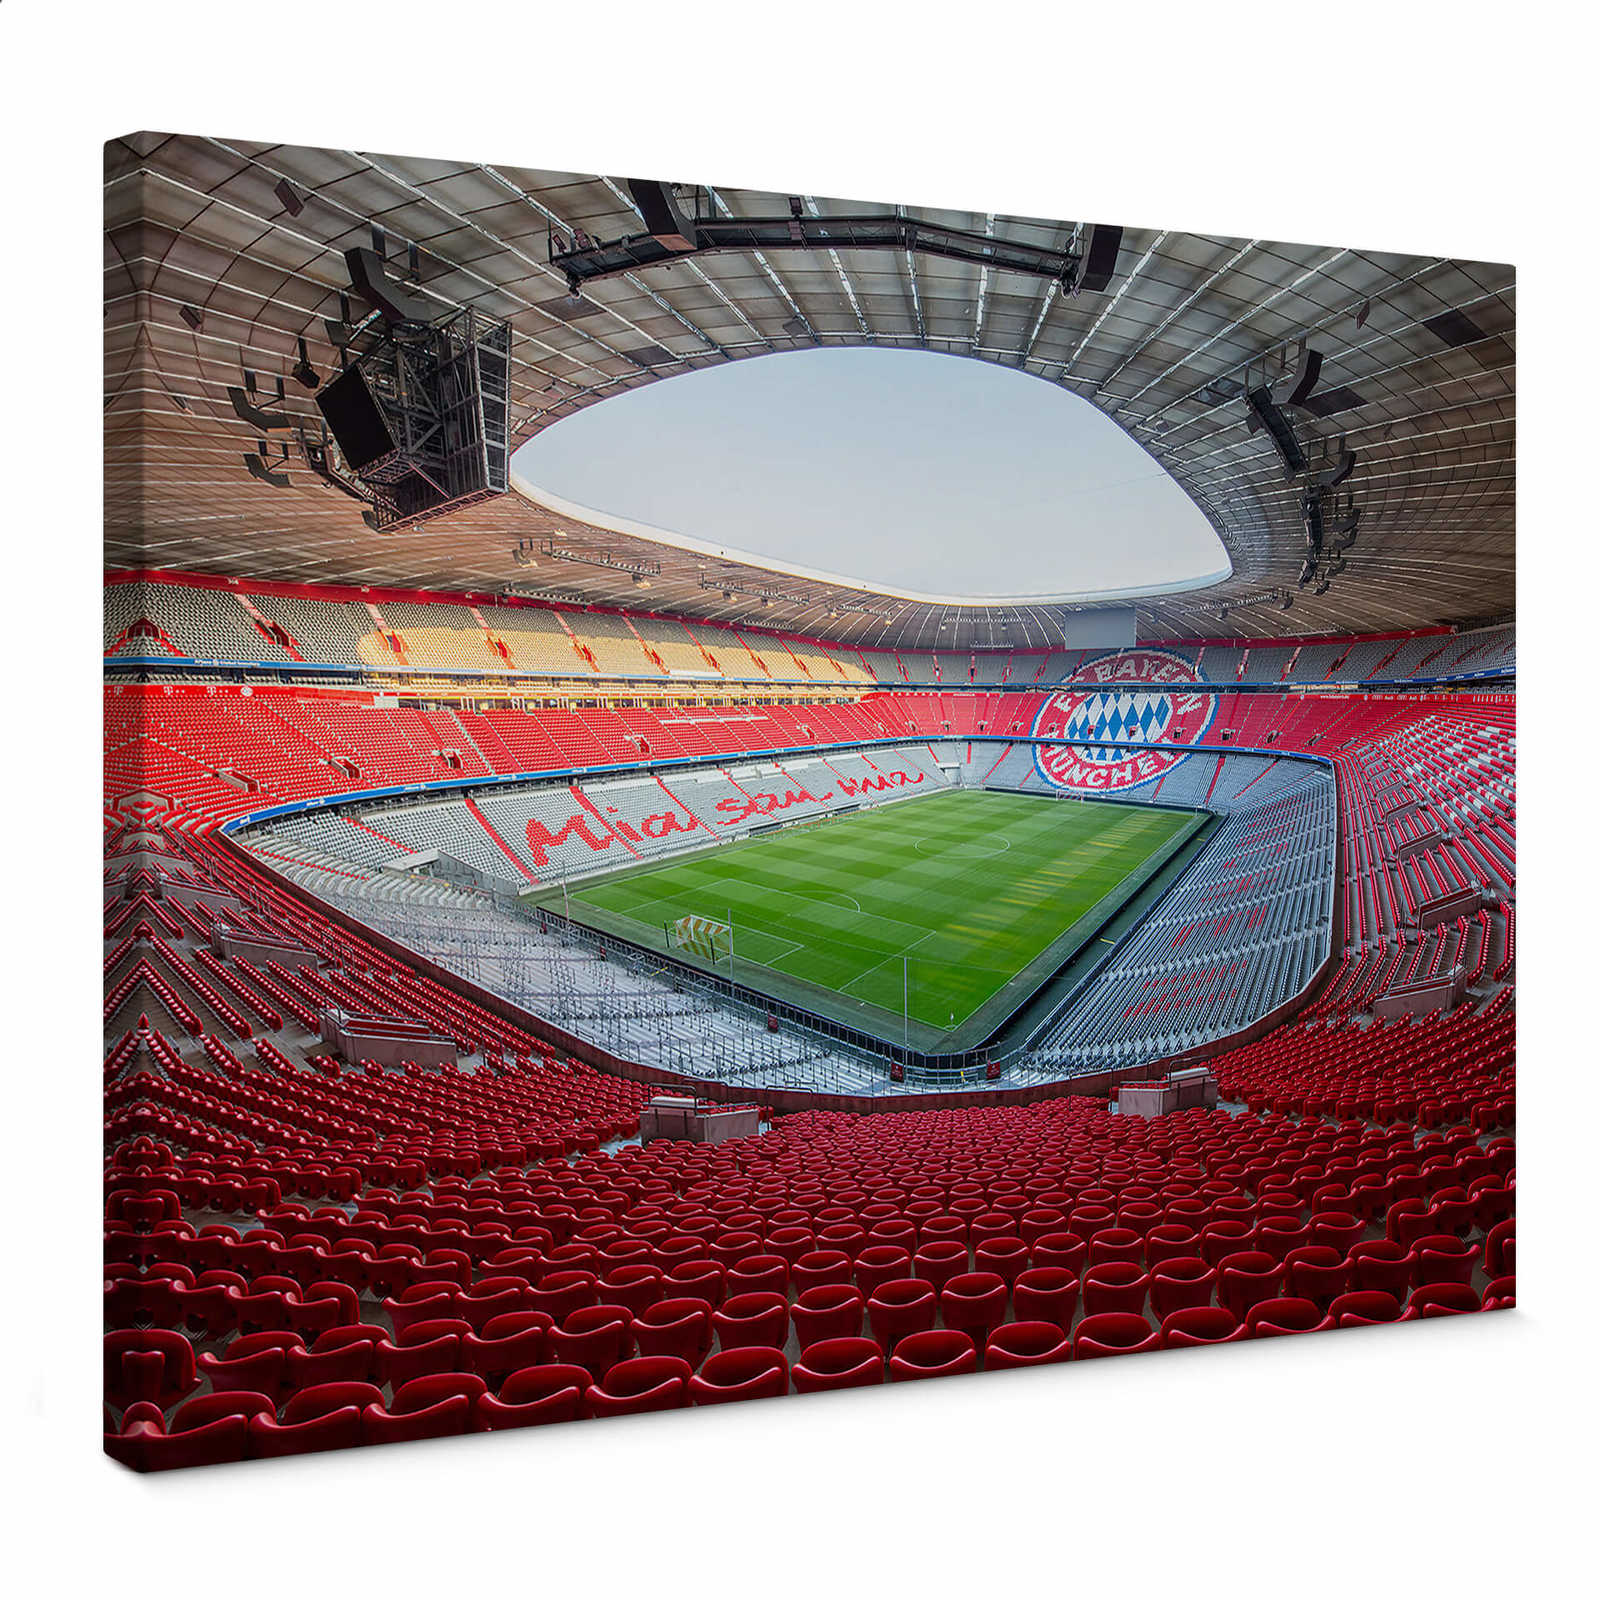         Canvas print FC Bayern stadium – Mia san mia
    